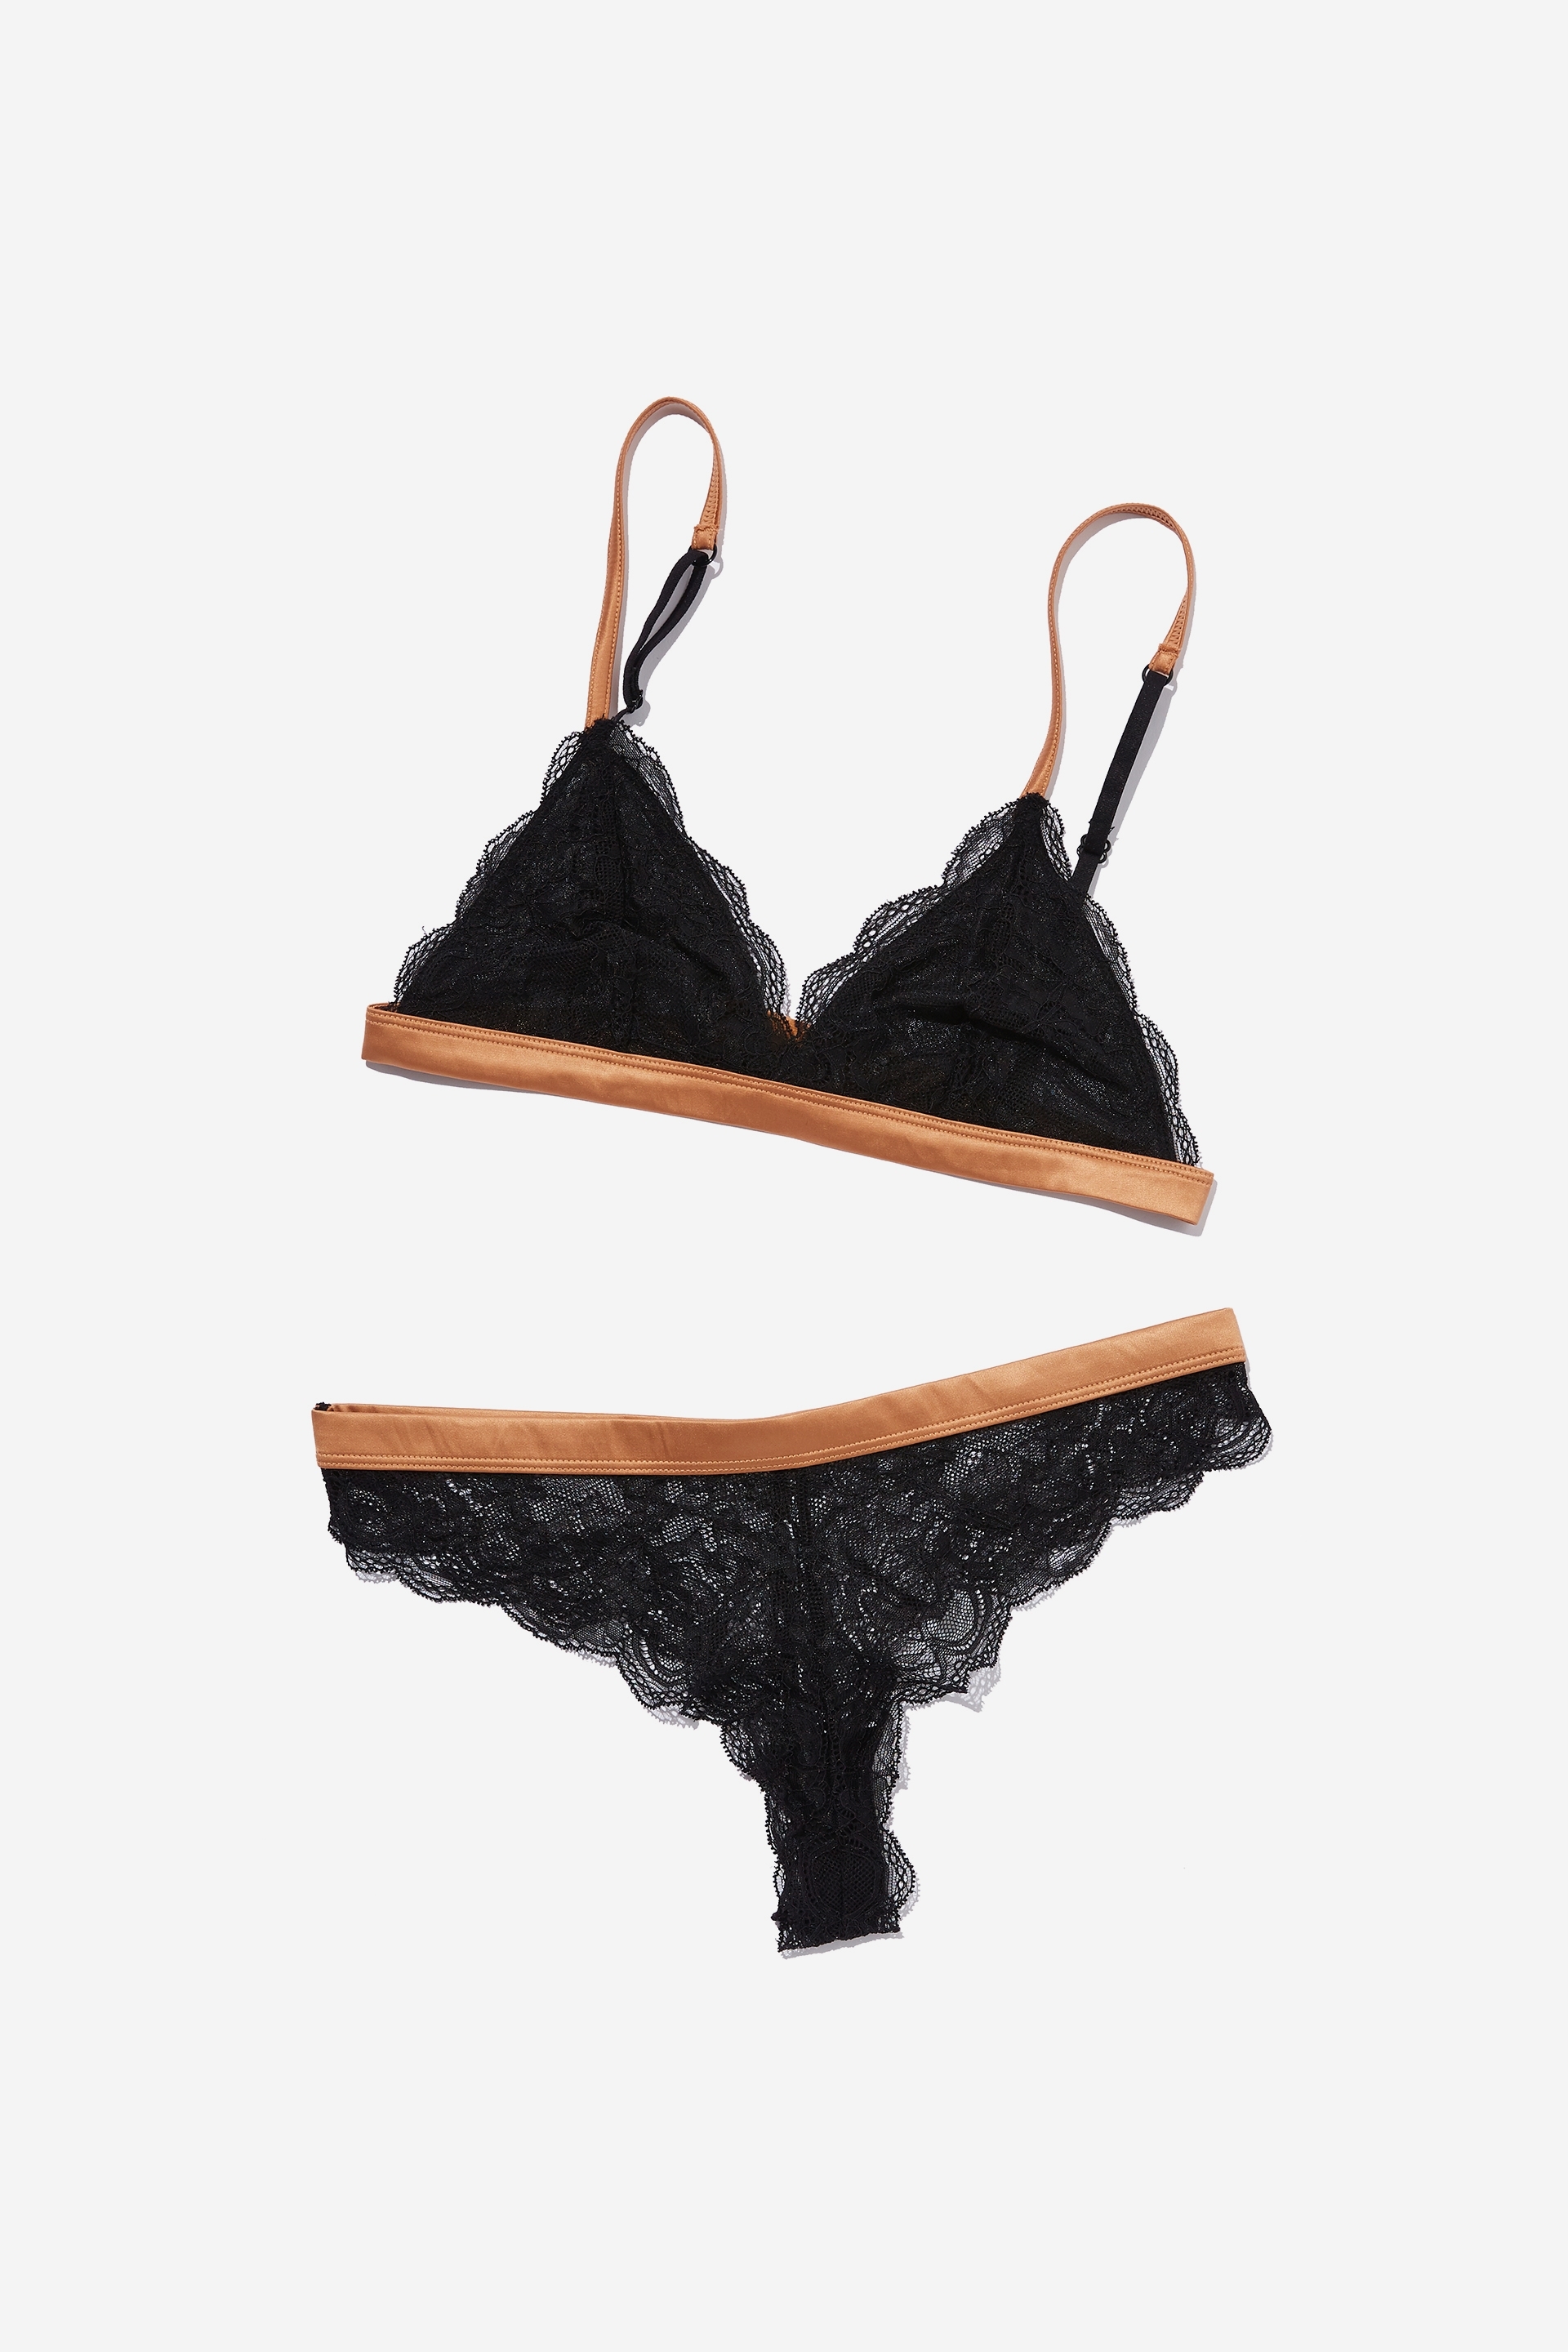 Body - lace and satin lingerie box set - black/pecan fudge